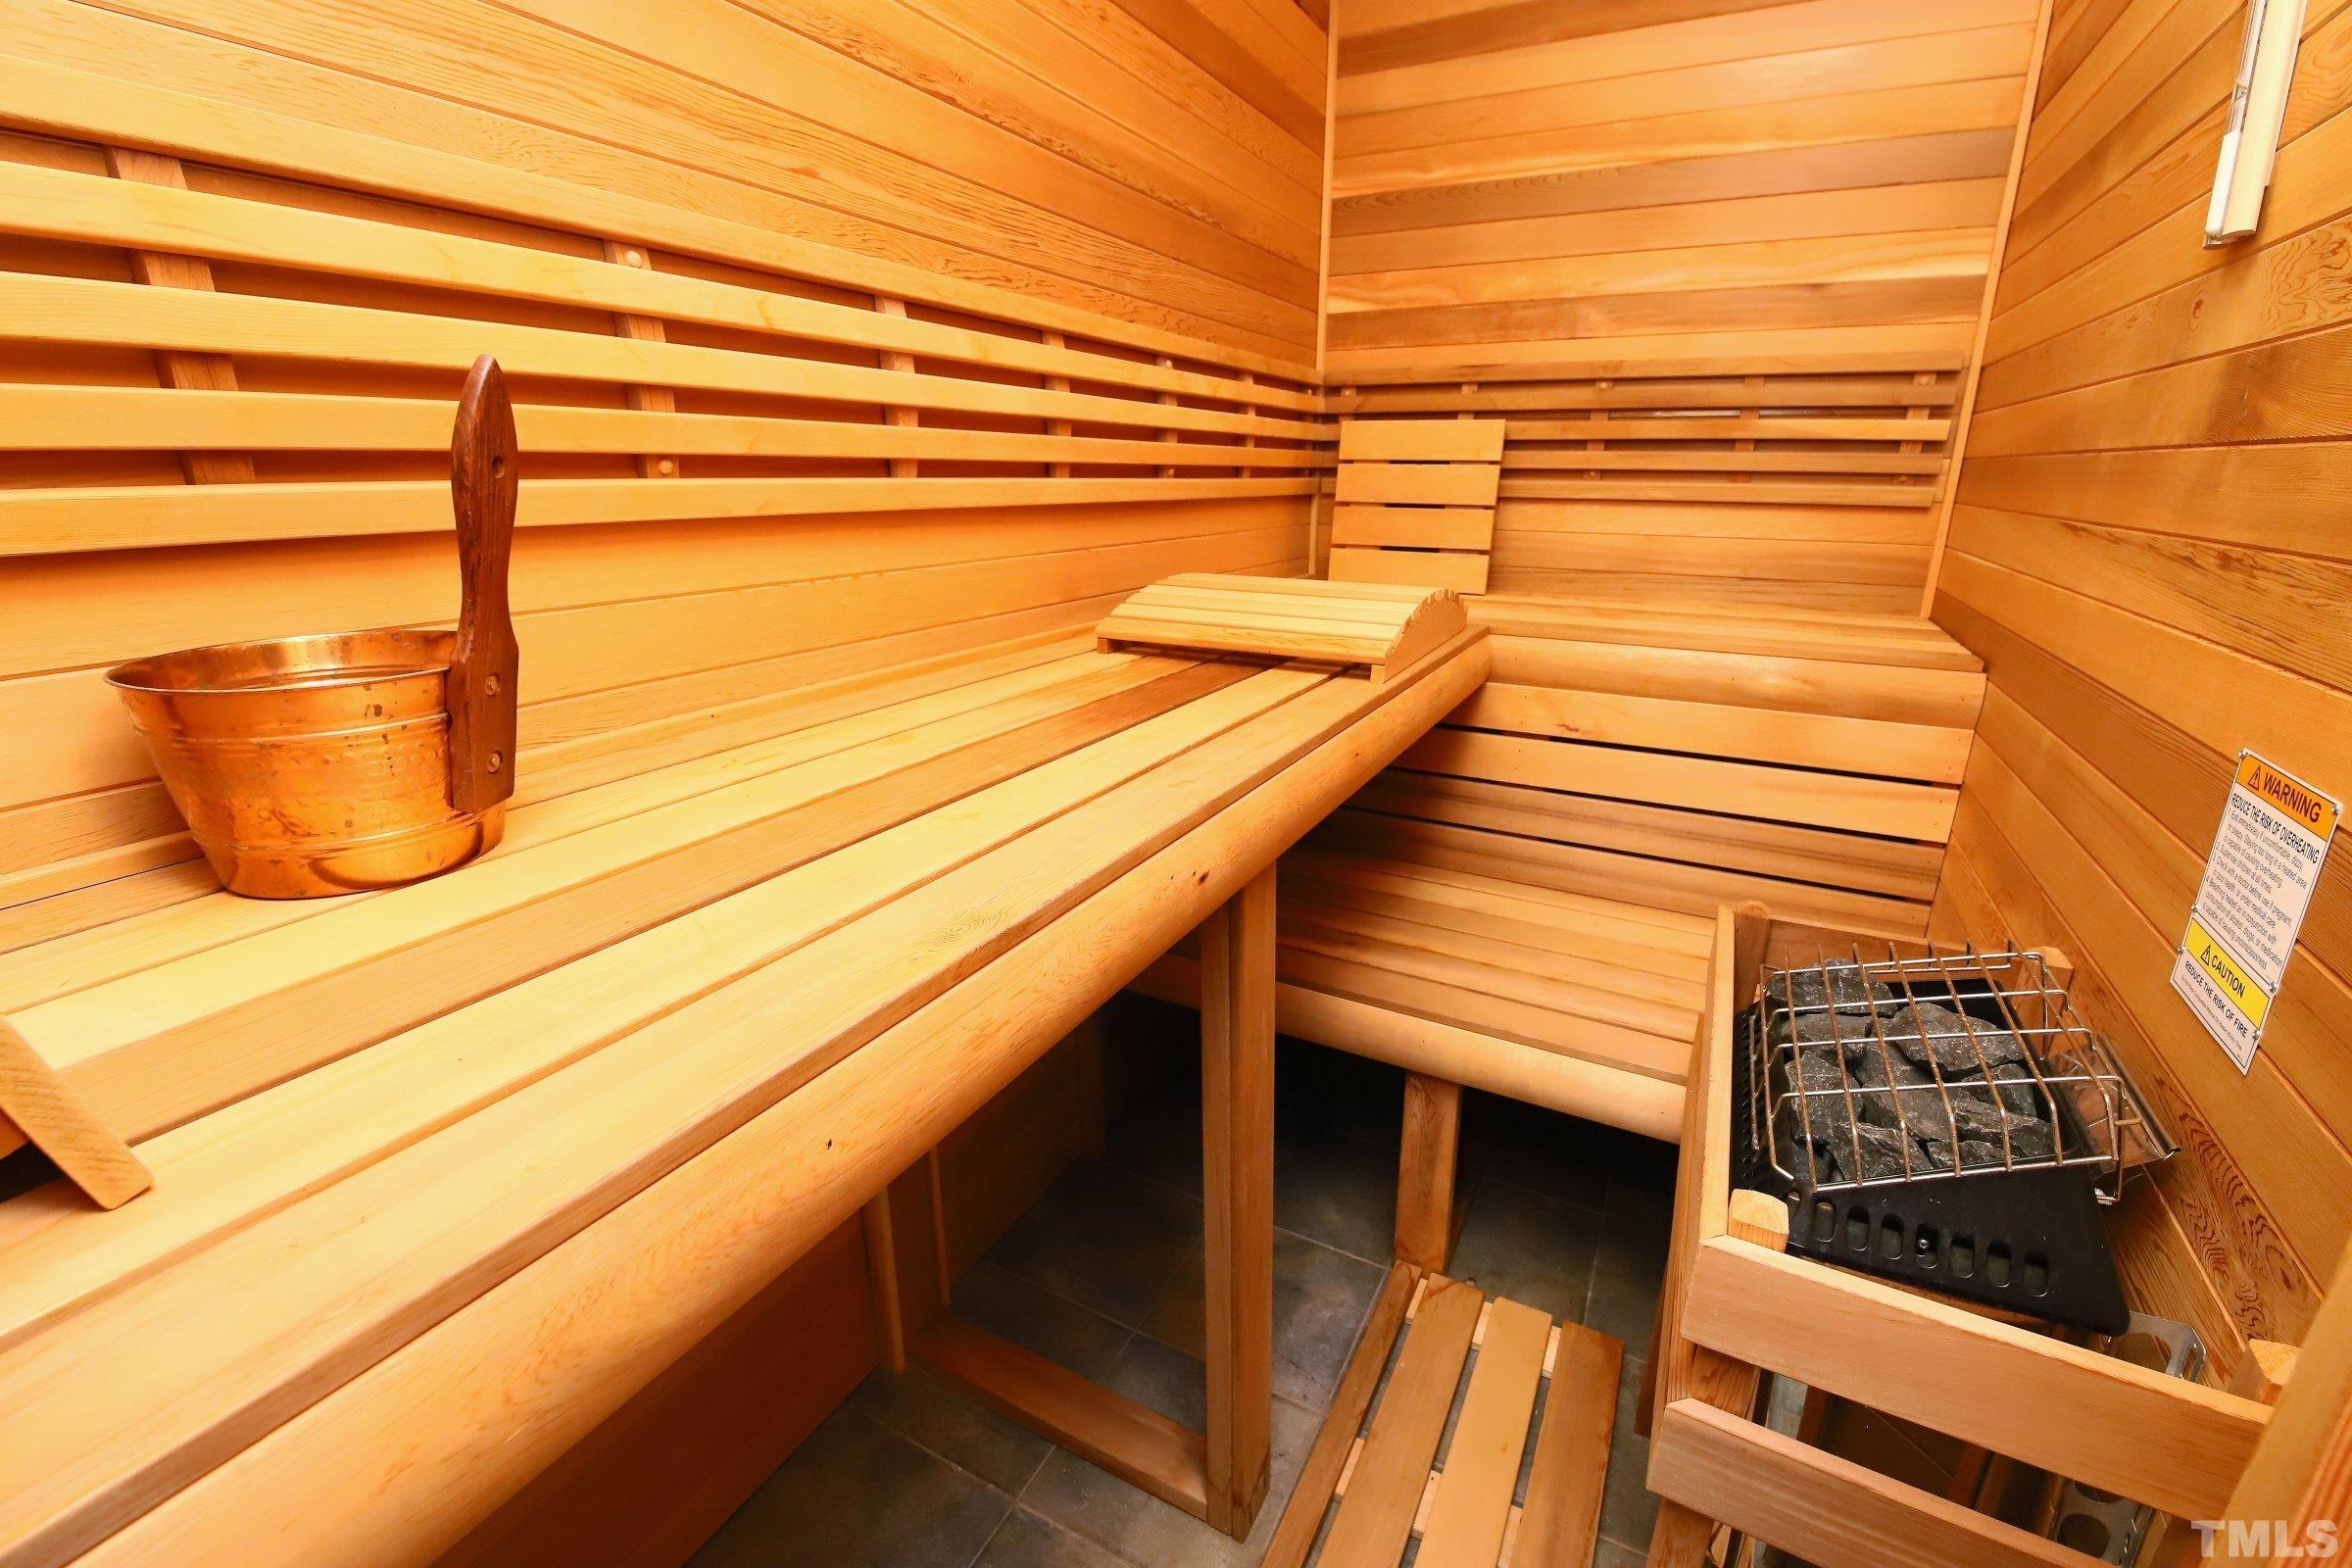 Pool House Sauna